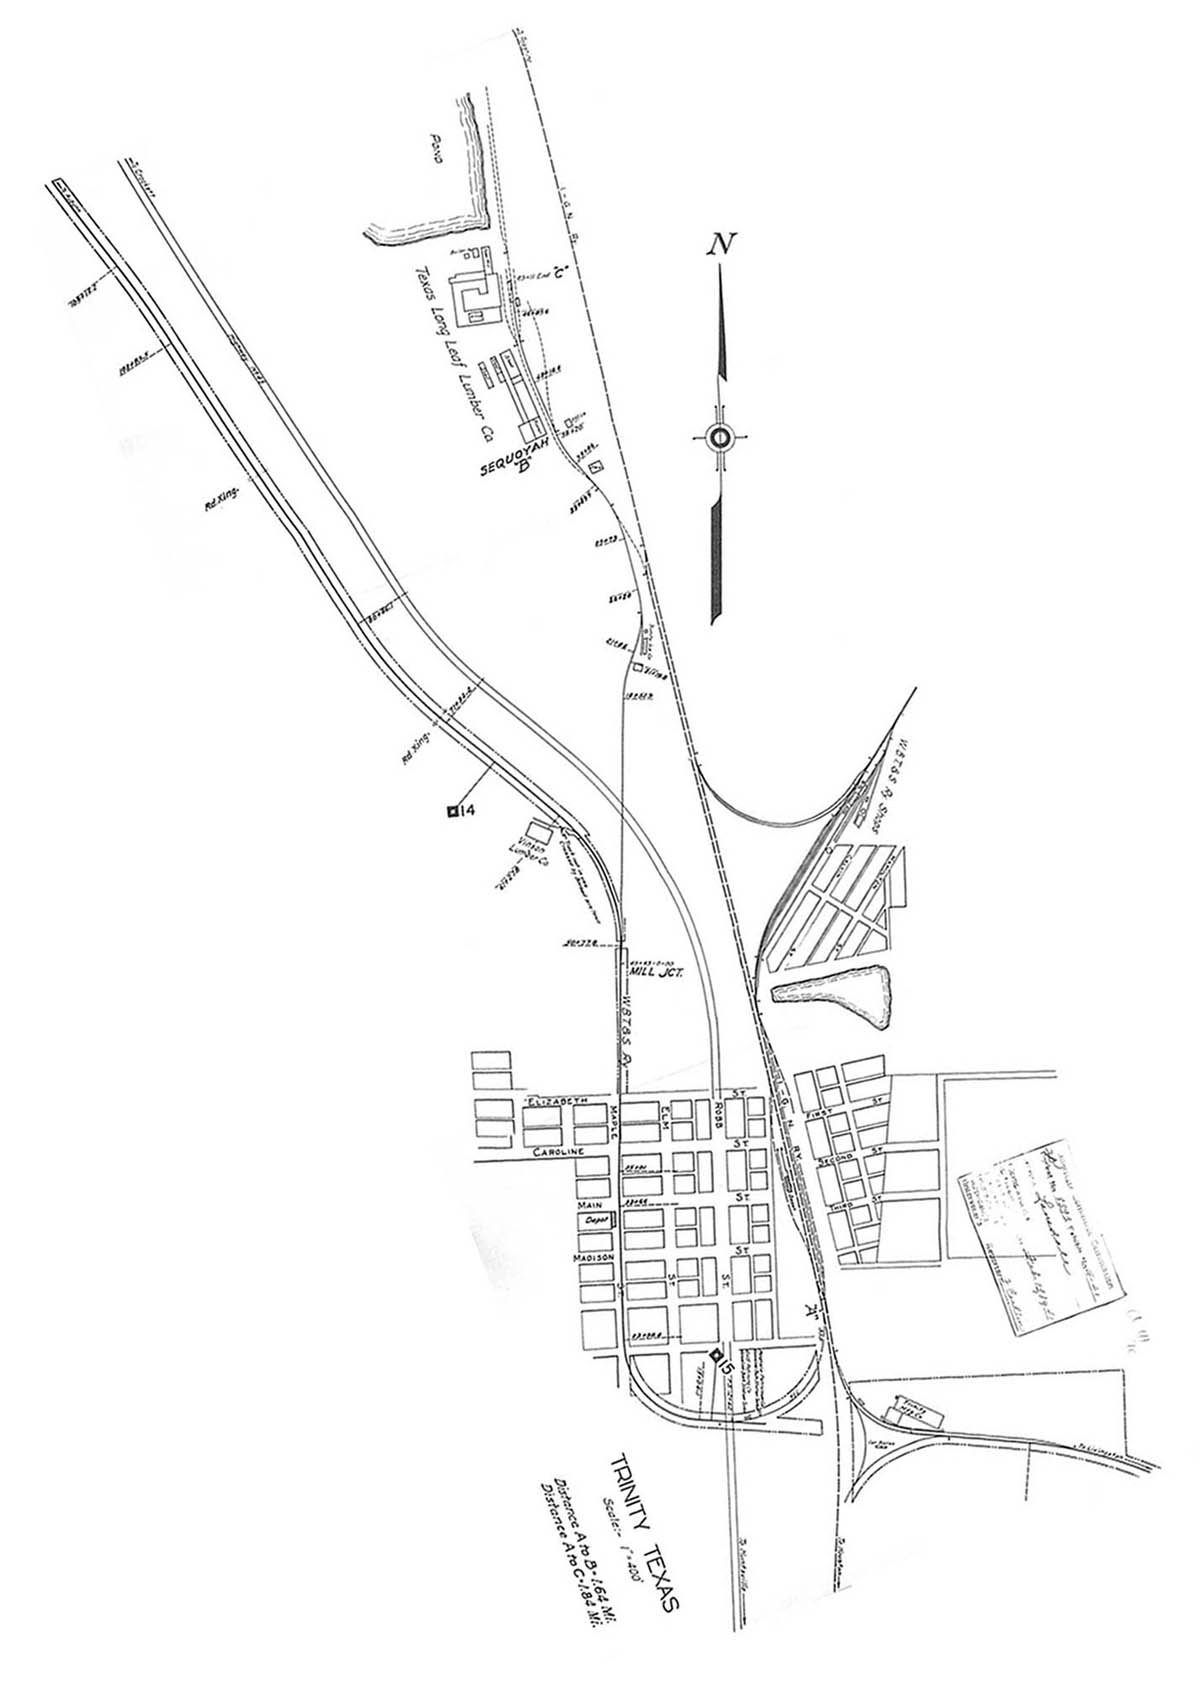 Waco, Beaumont, Trinity & Sabine Railway Company (Tex.), Map Showing Station Layout at Trinity, Texas in 1940.